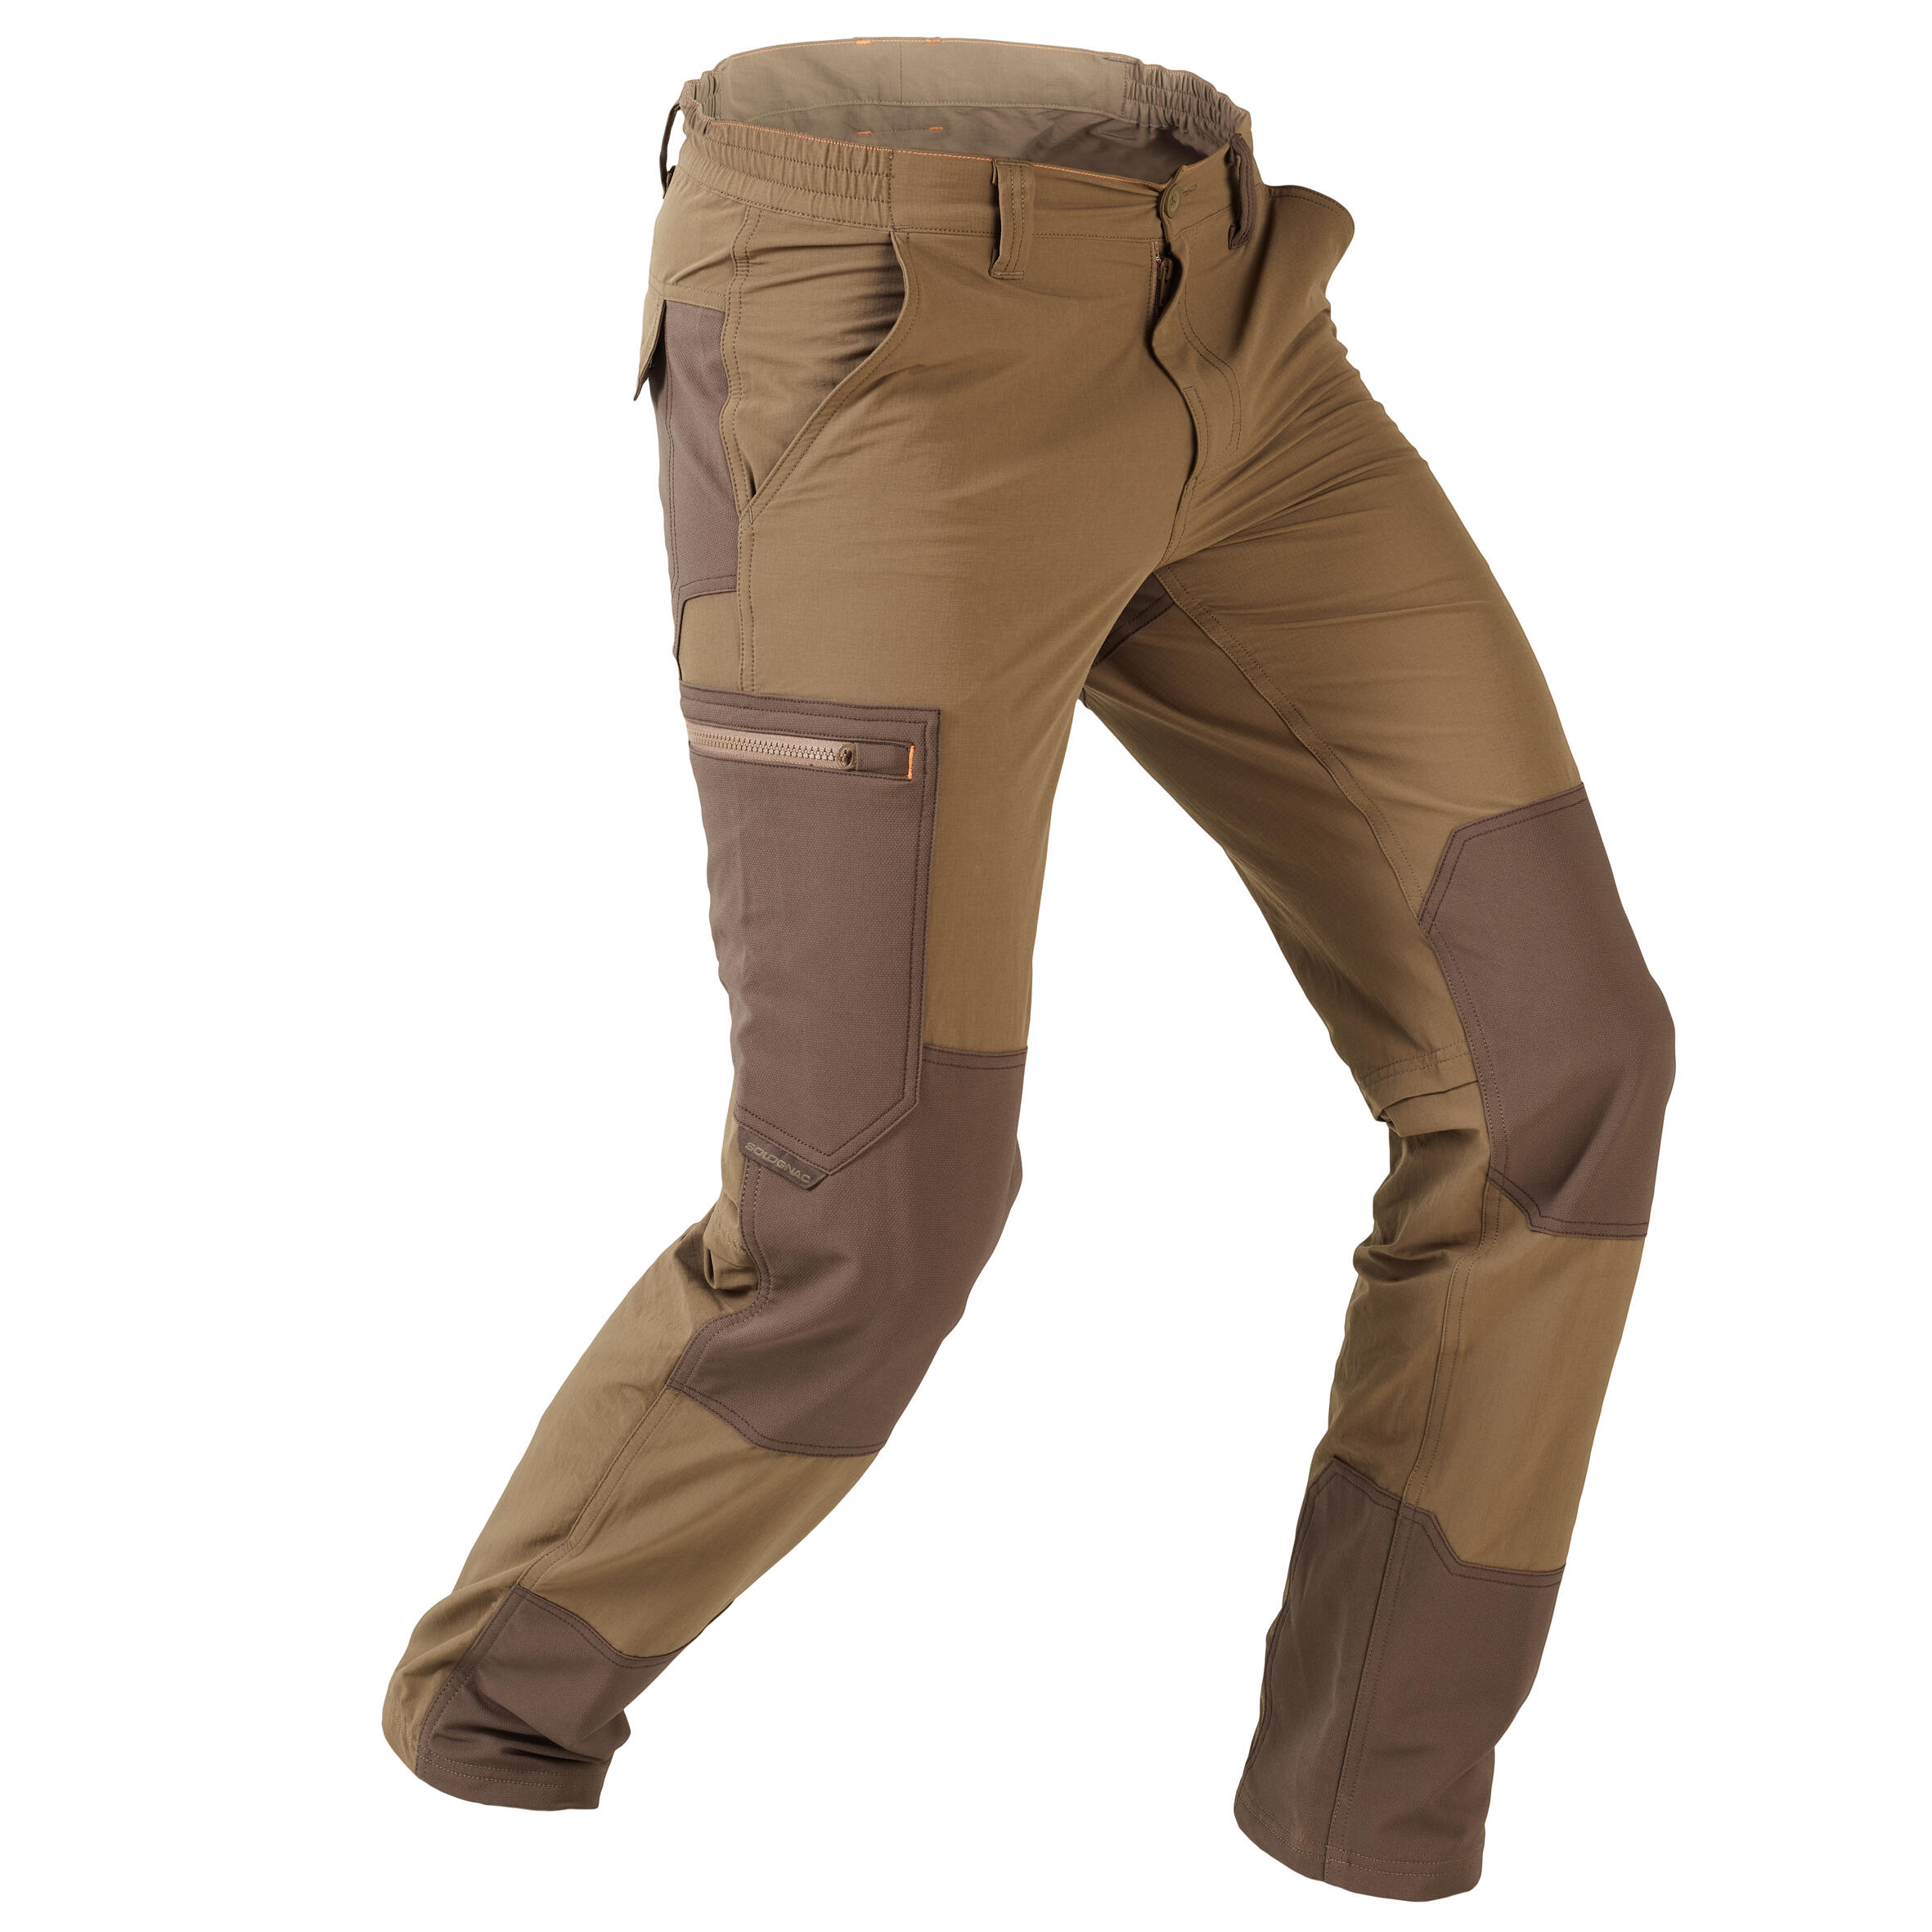 Men's Hiking Pants - NH 500 Grey - Carbon grey - Quechua - Decathlon